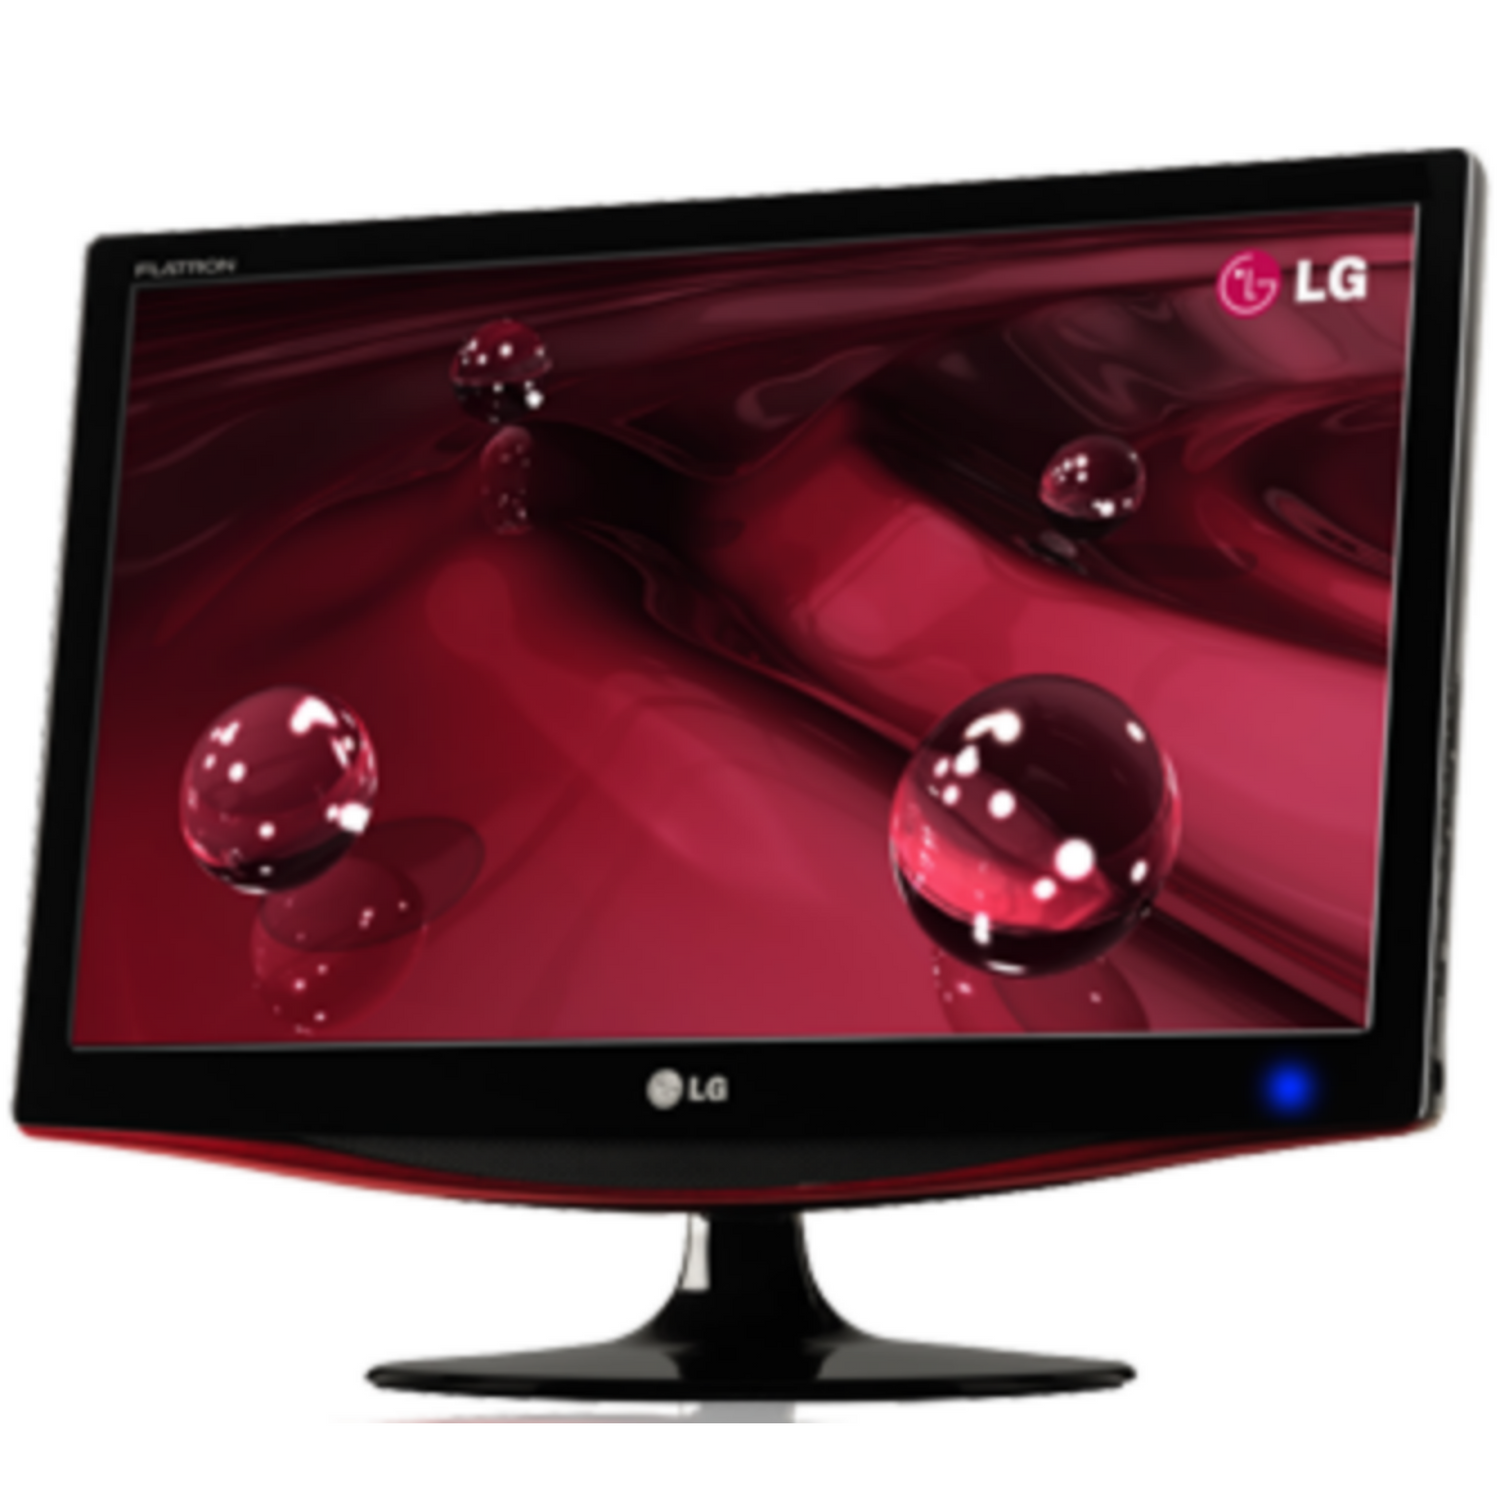 TV LG 43 Pulgadas 4K Ultra HD Smart TV LED 43UH610 Reacondicionada